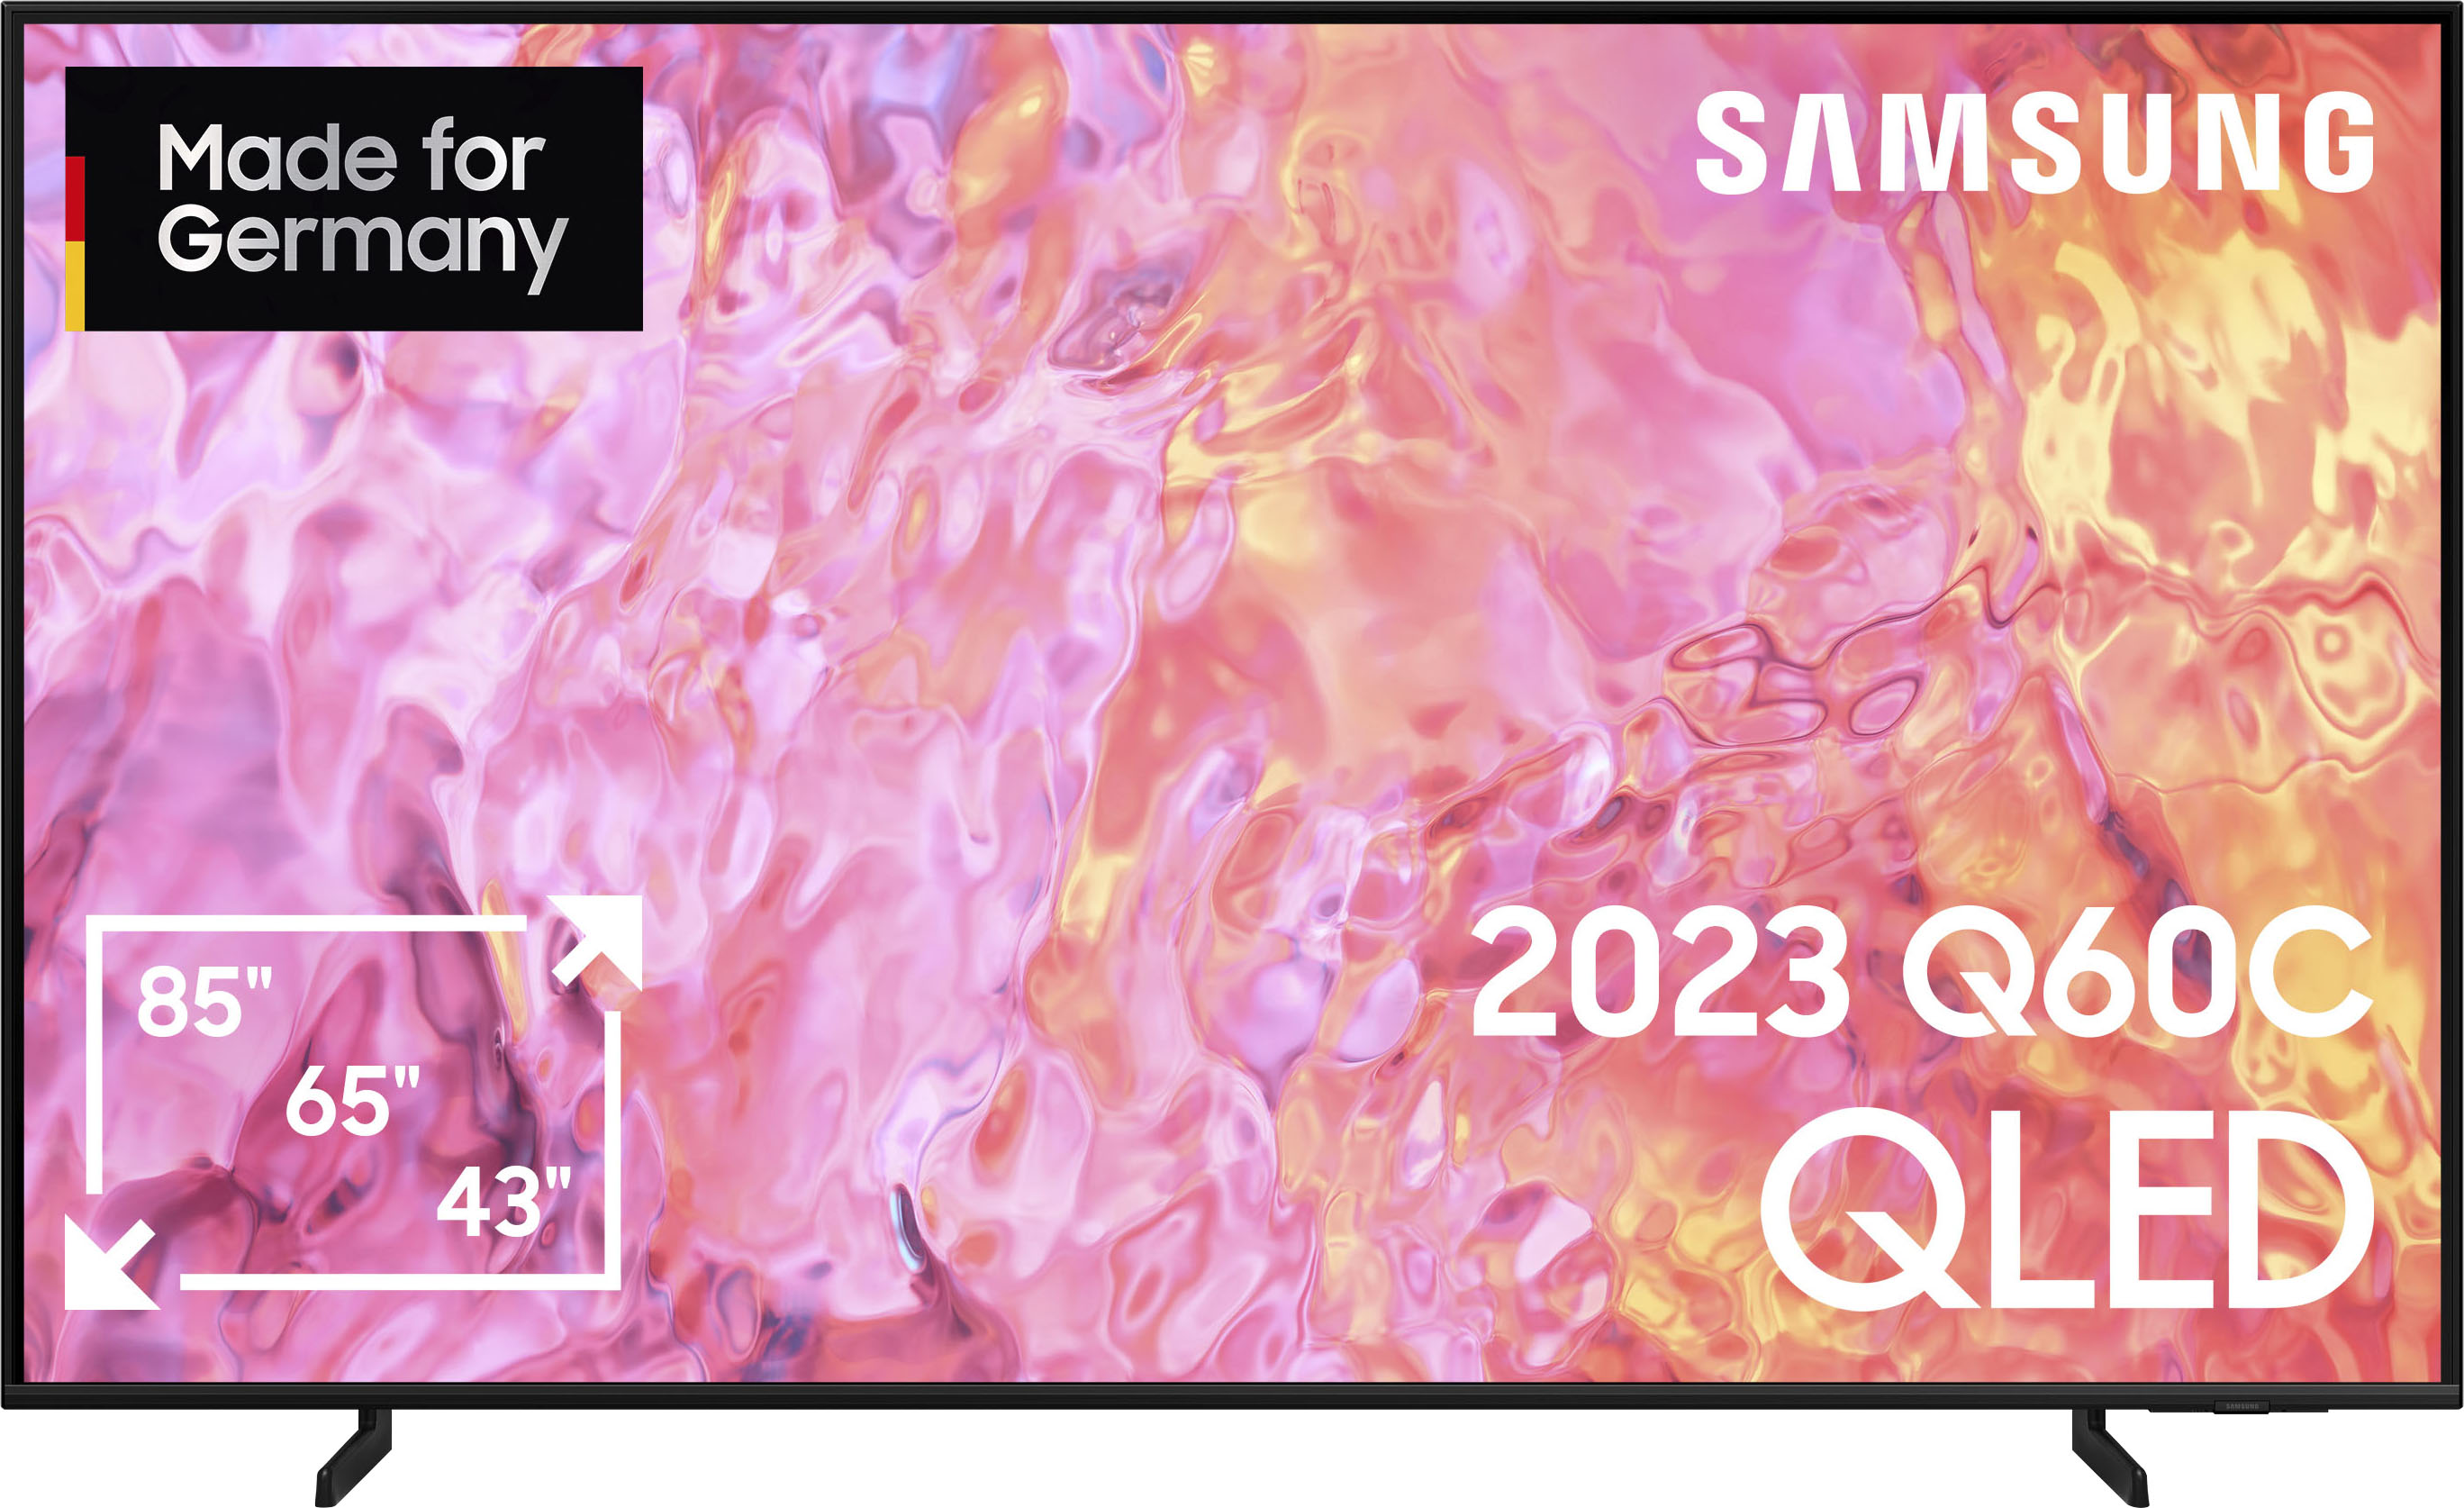 Samsung GQ65Q60C 163cm 65